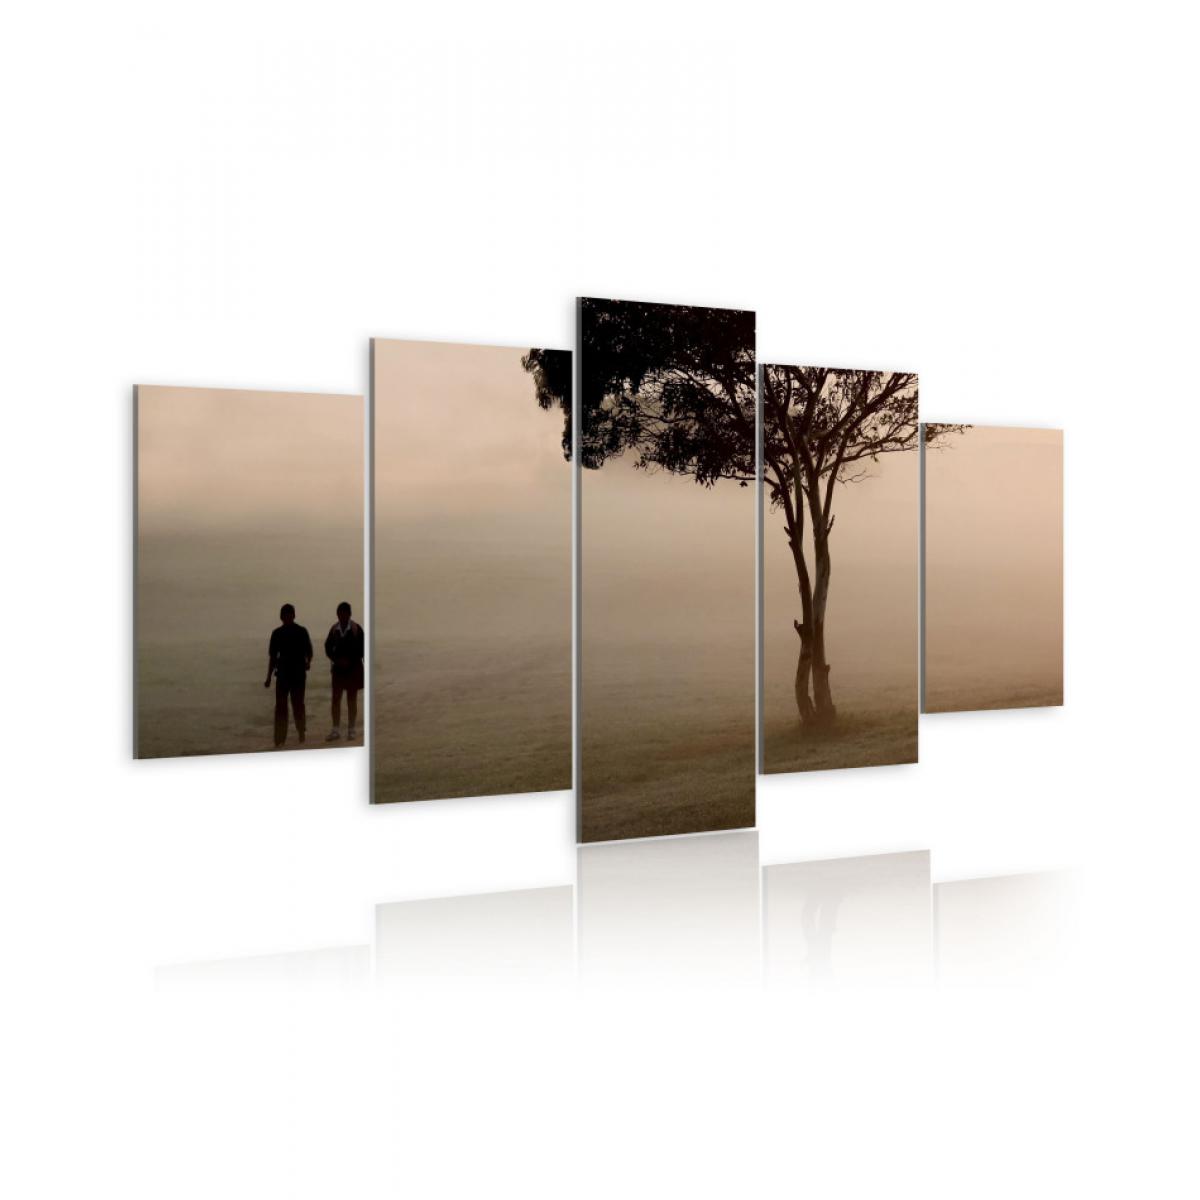 Artgeist - Tableau - Promenade dans le brouillard 100x50 - Tableaux, peintures